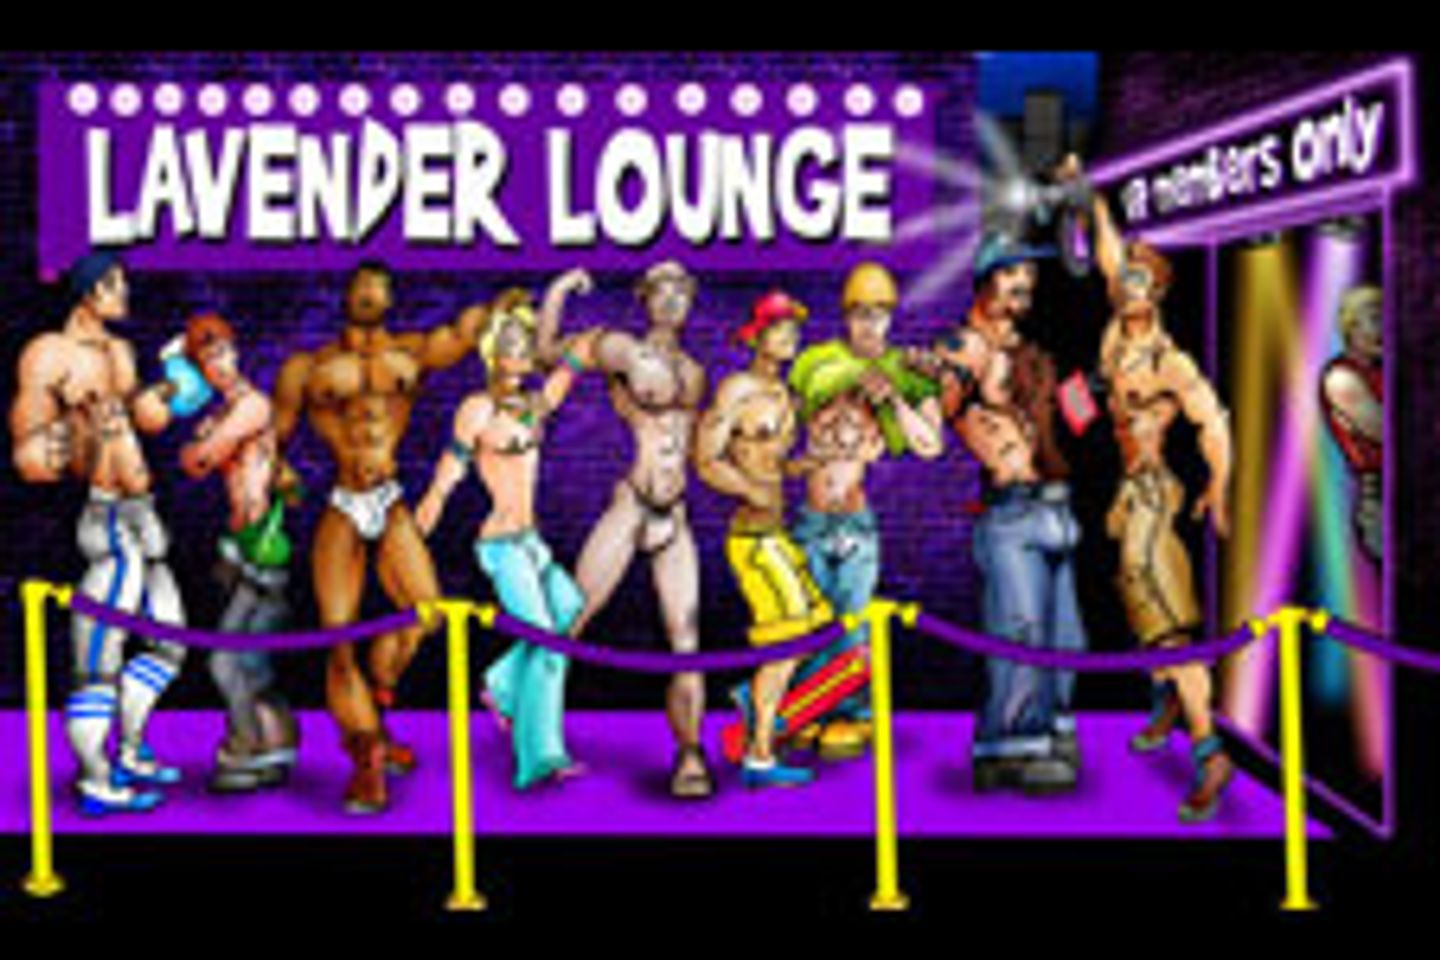 Lavender Lounge Offers Dreamy New Update on VintageBareback.com